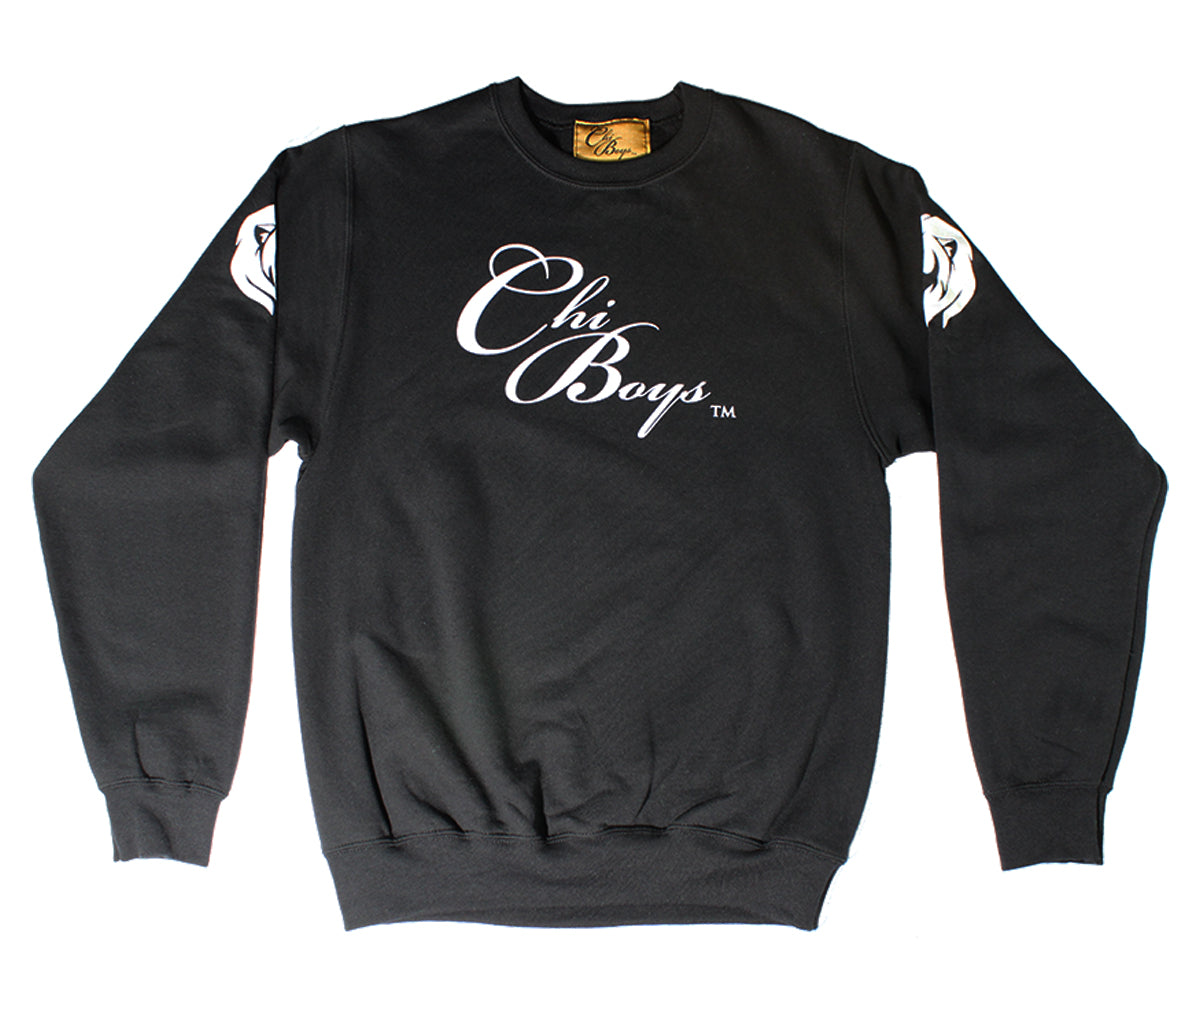 ChiBoys Logo Sweatshirt (Black)